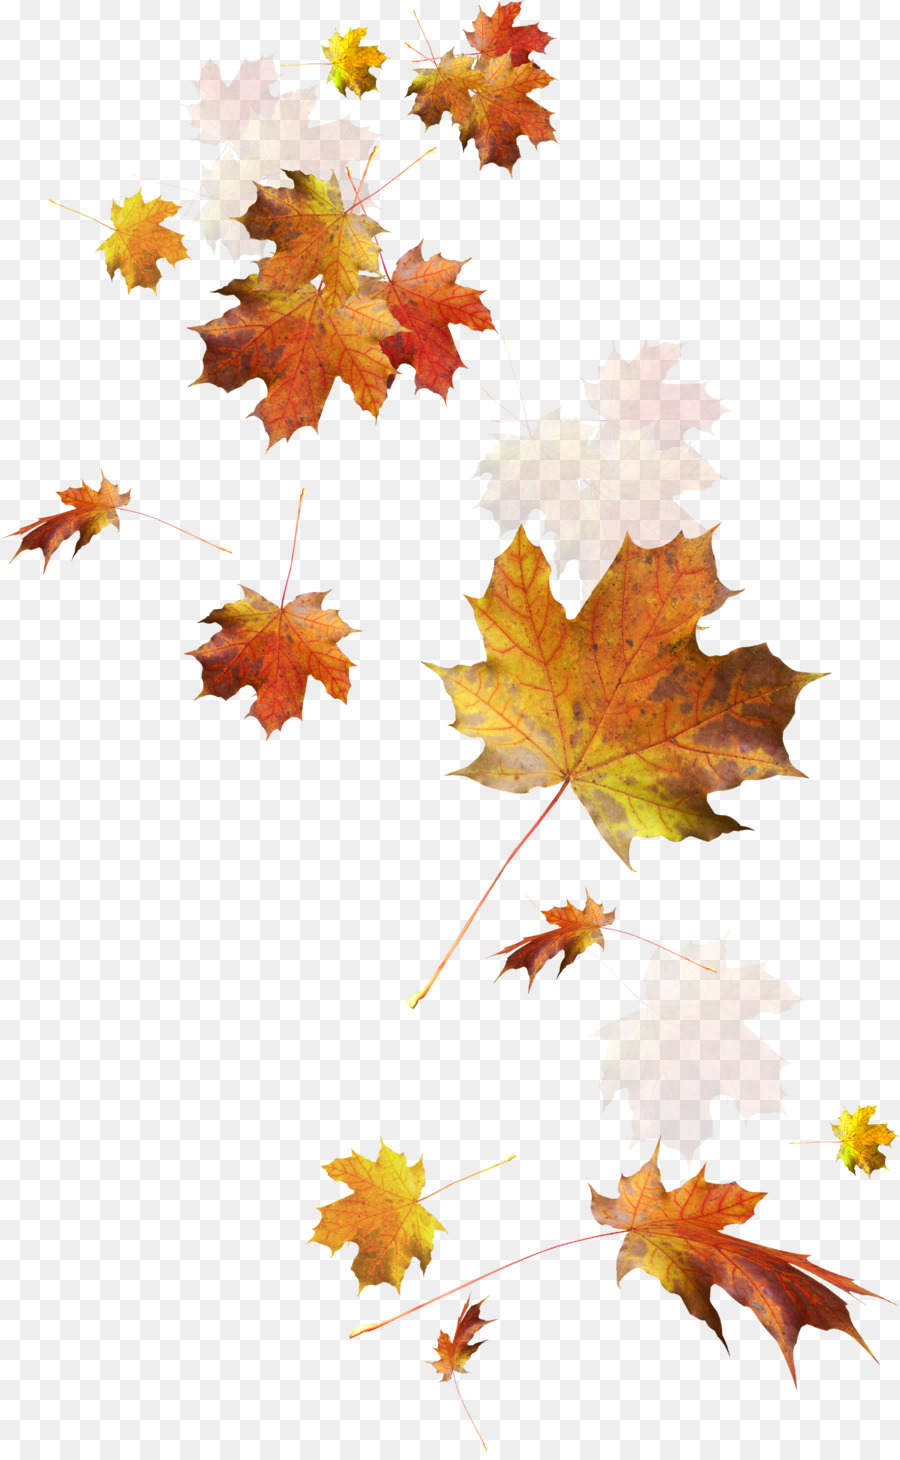 Autumn Leaves Autumn leaf color - Falling leaves png download - 1611*2598 - Free Transparent Autumn Leaf Color png Download.